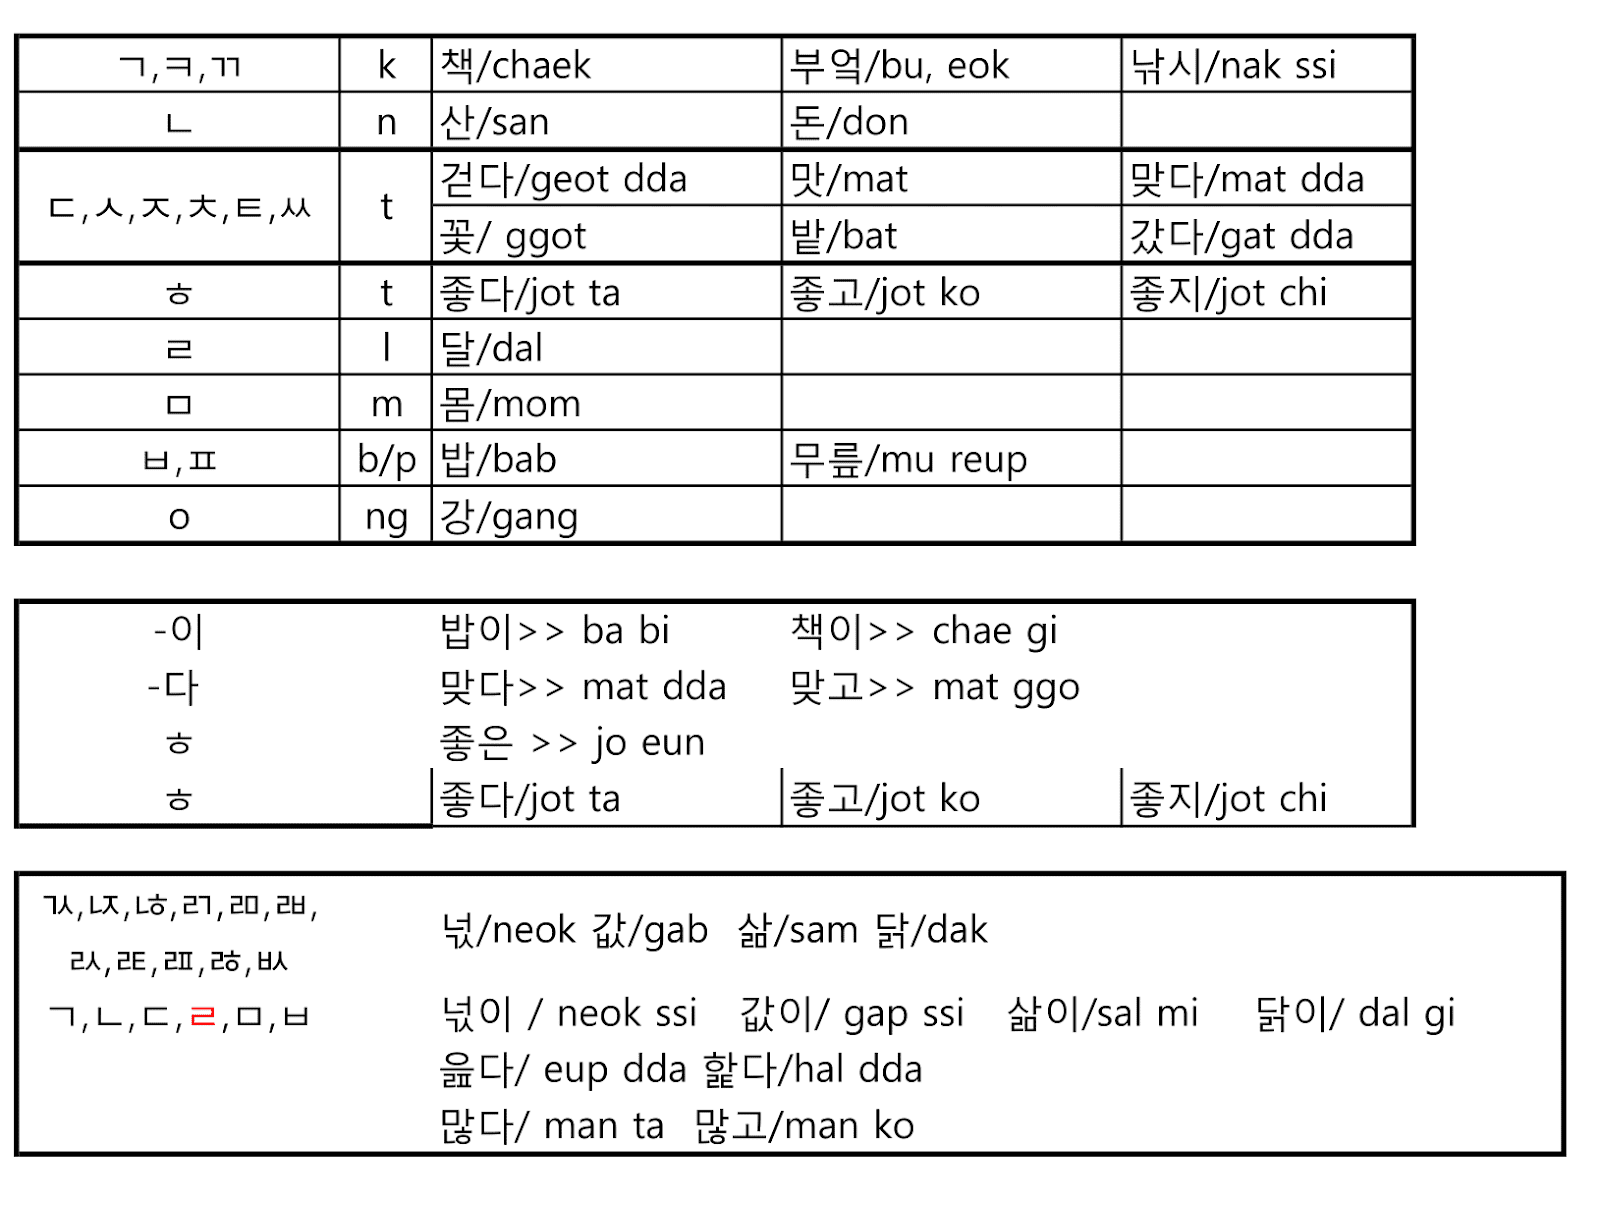 Learn Korean Alphabet Chart